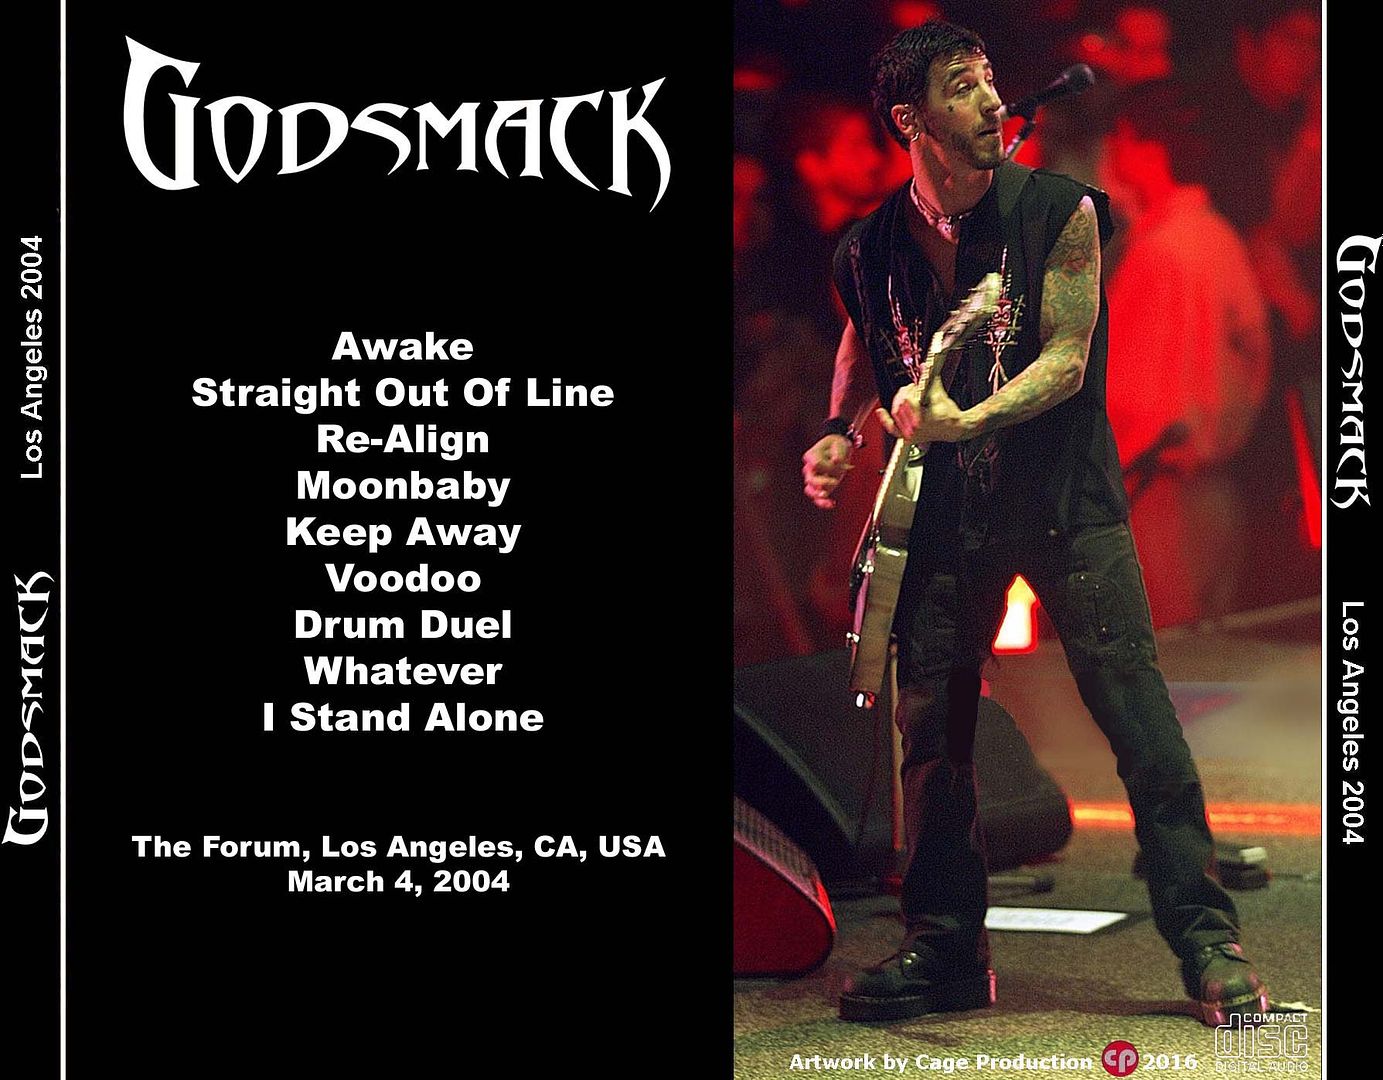 photo Godsmack-Los Angeles 2004 back_zpseowlbwa6.jpg